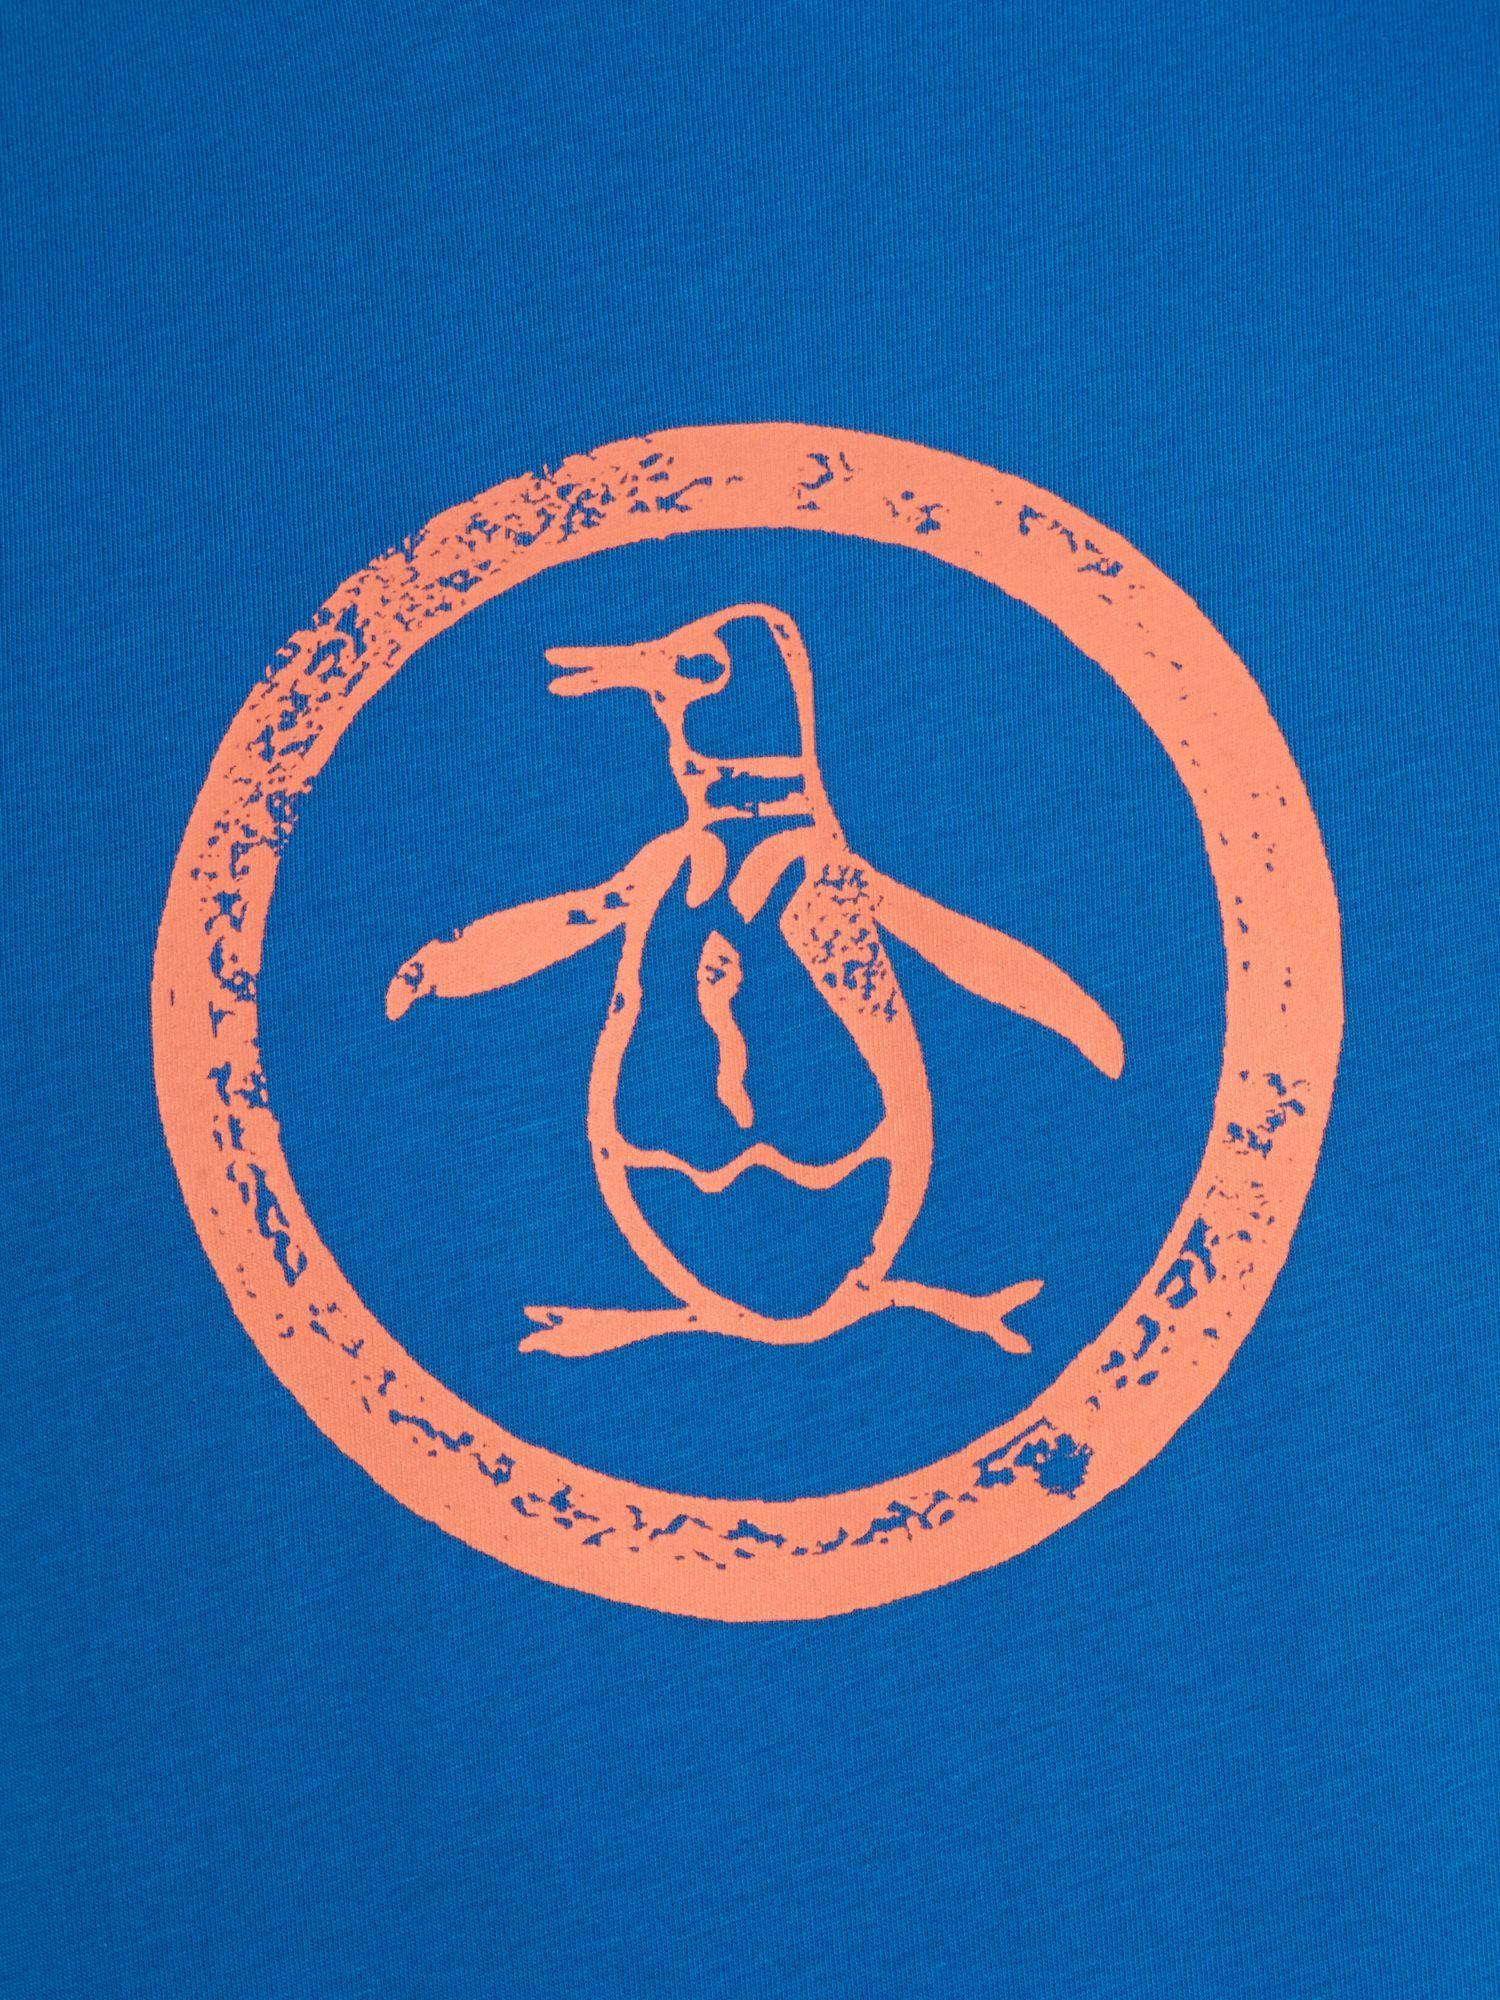 Penguin in Orange Circle Logo - Original penguin Logos